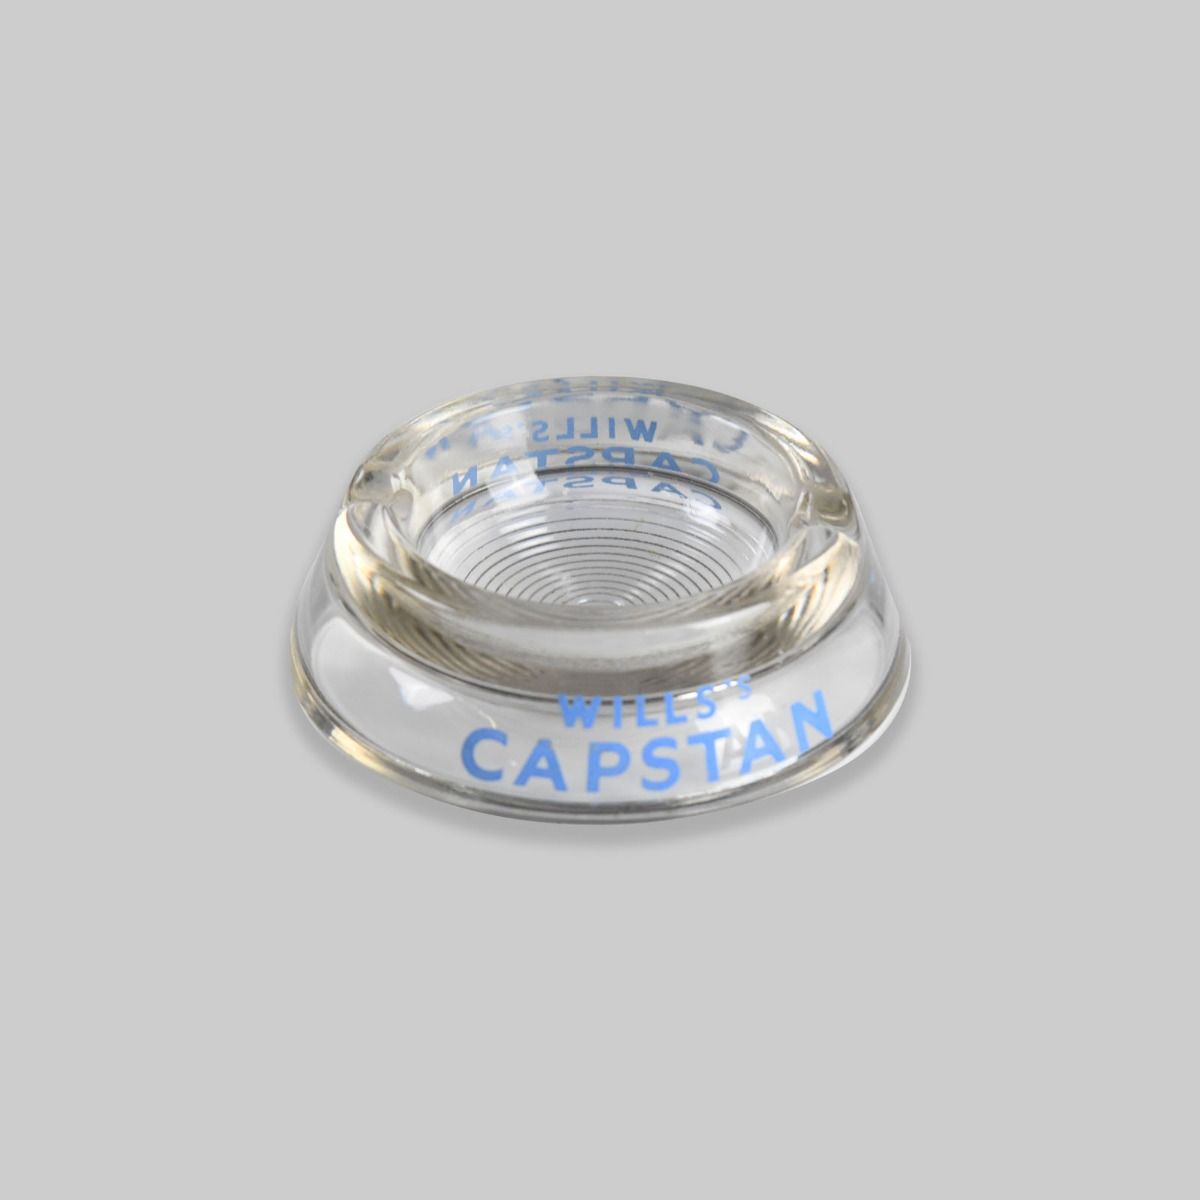 Vintage 1960s Will's Capstan Glass Ashtray